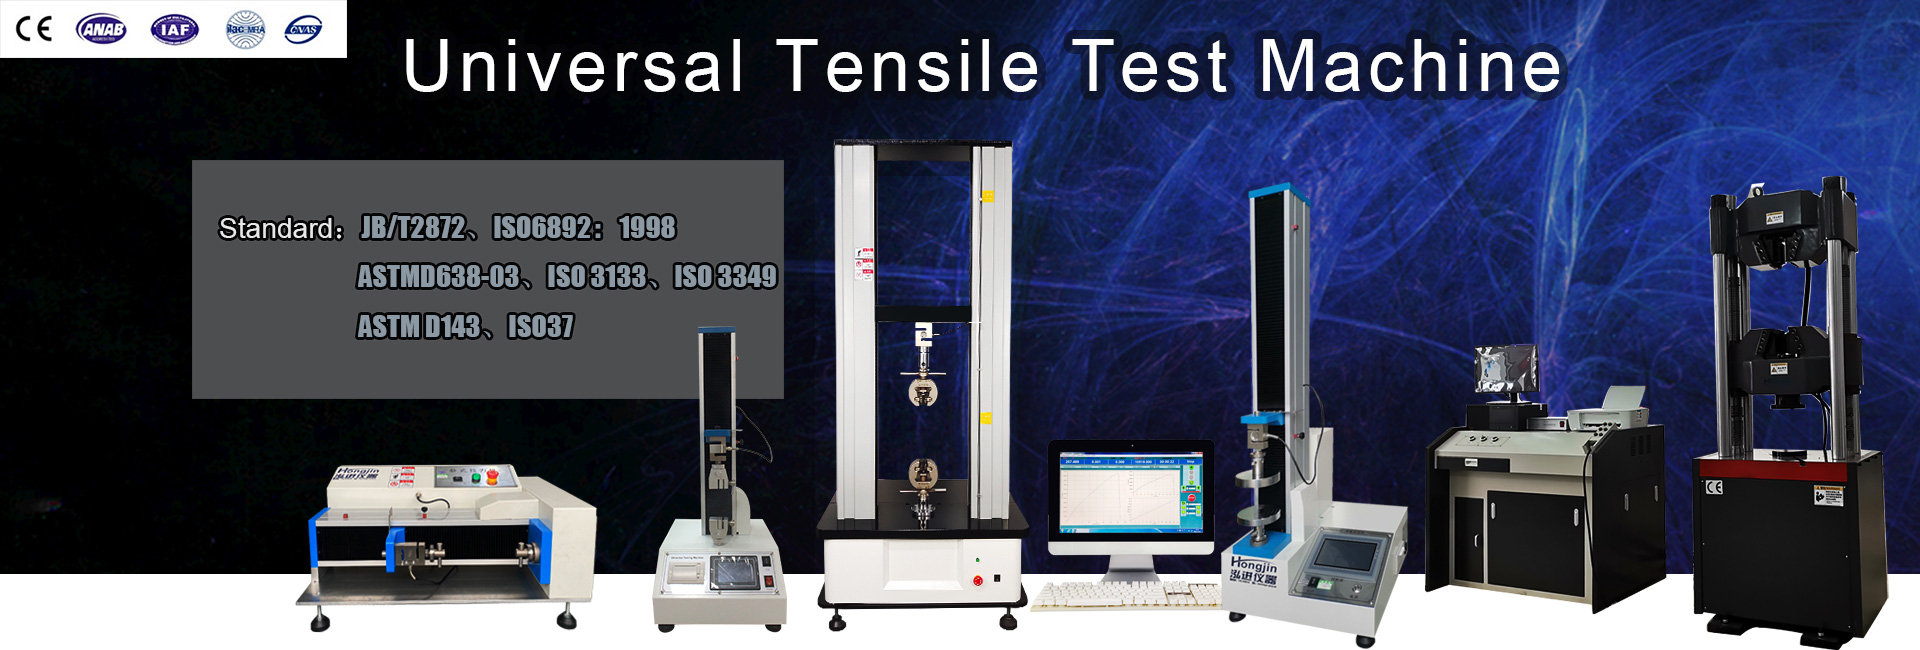 Universal tension testing machine